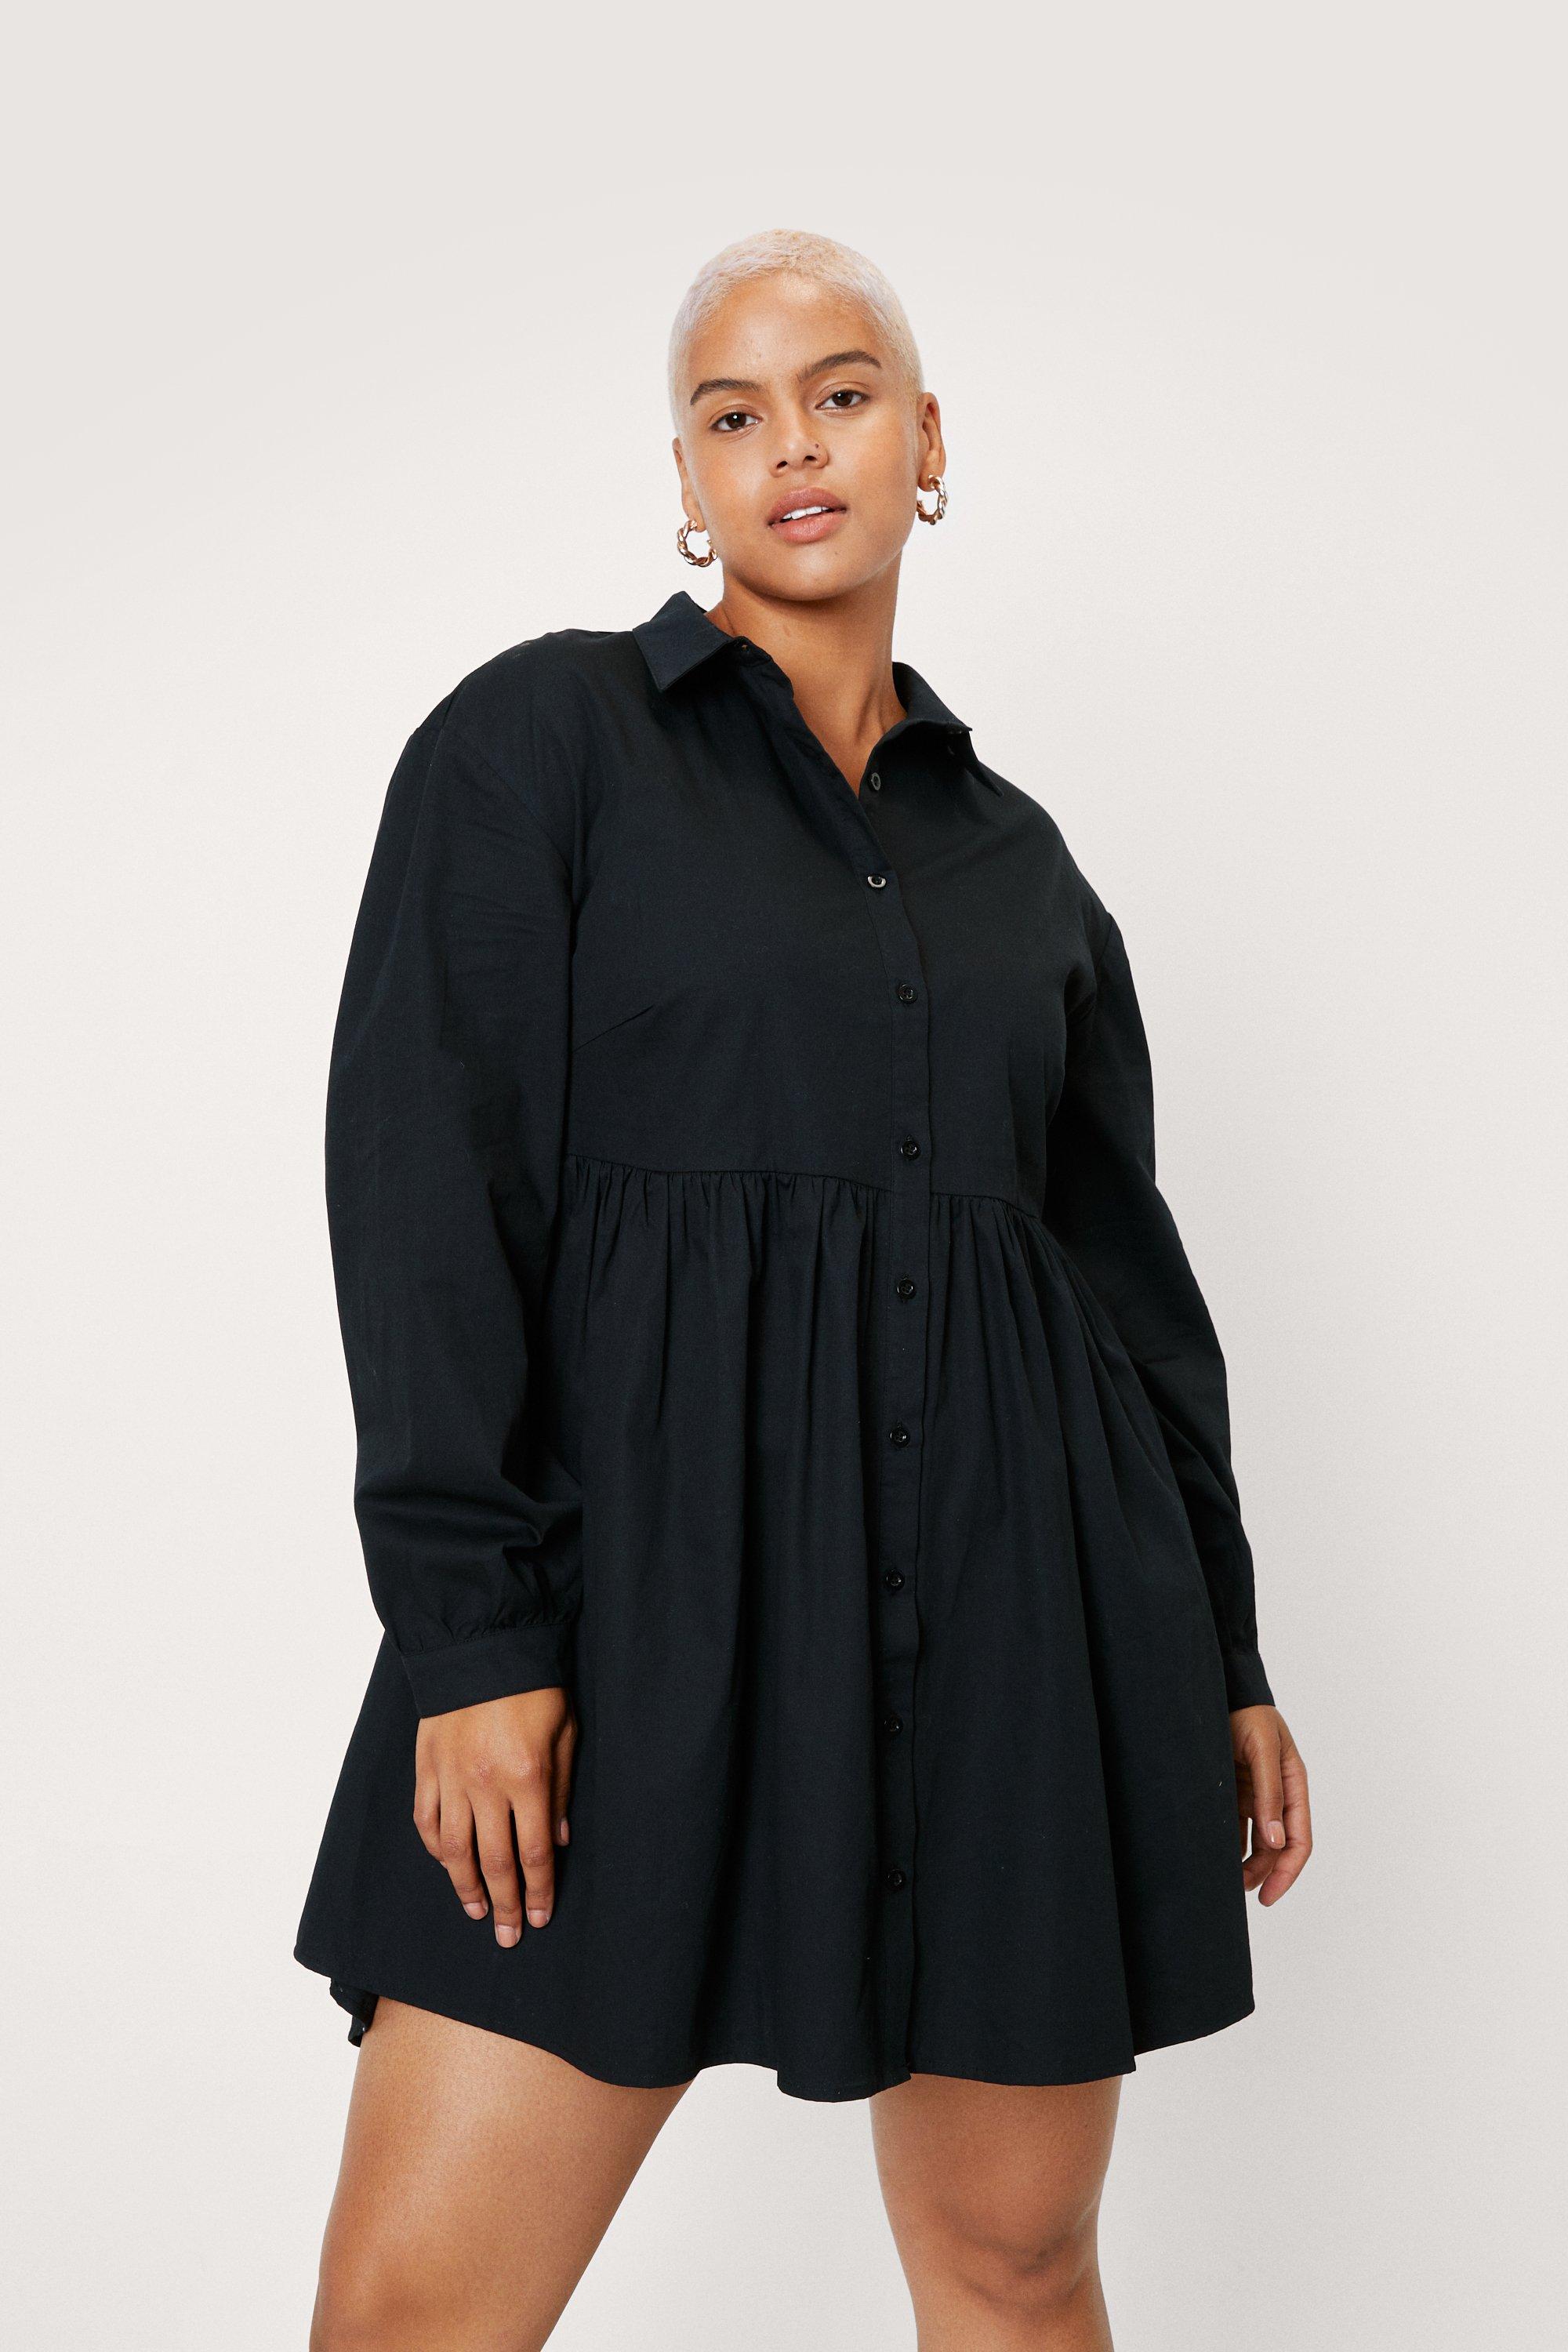 Plus Size Black Smock Tunic Dress